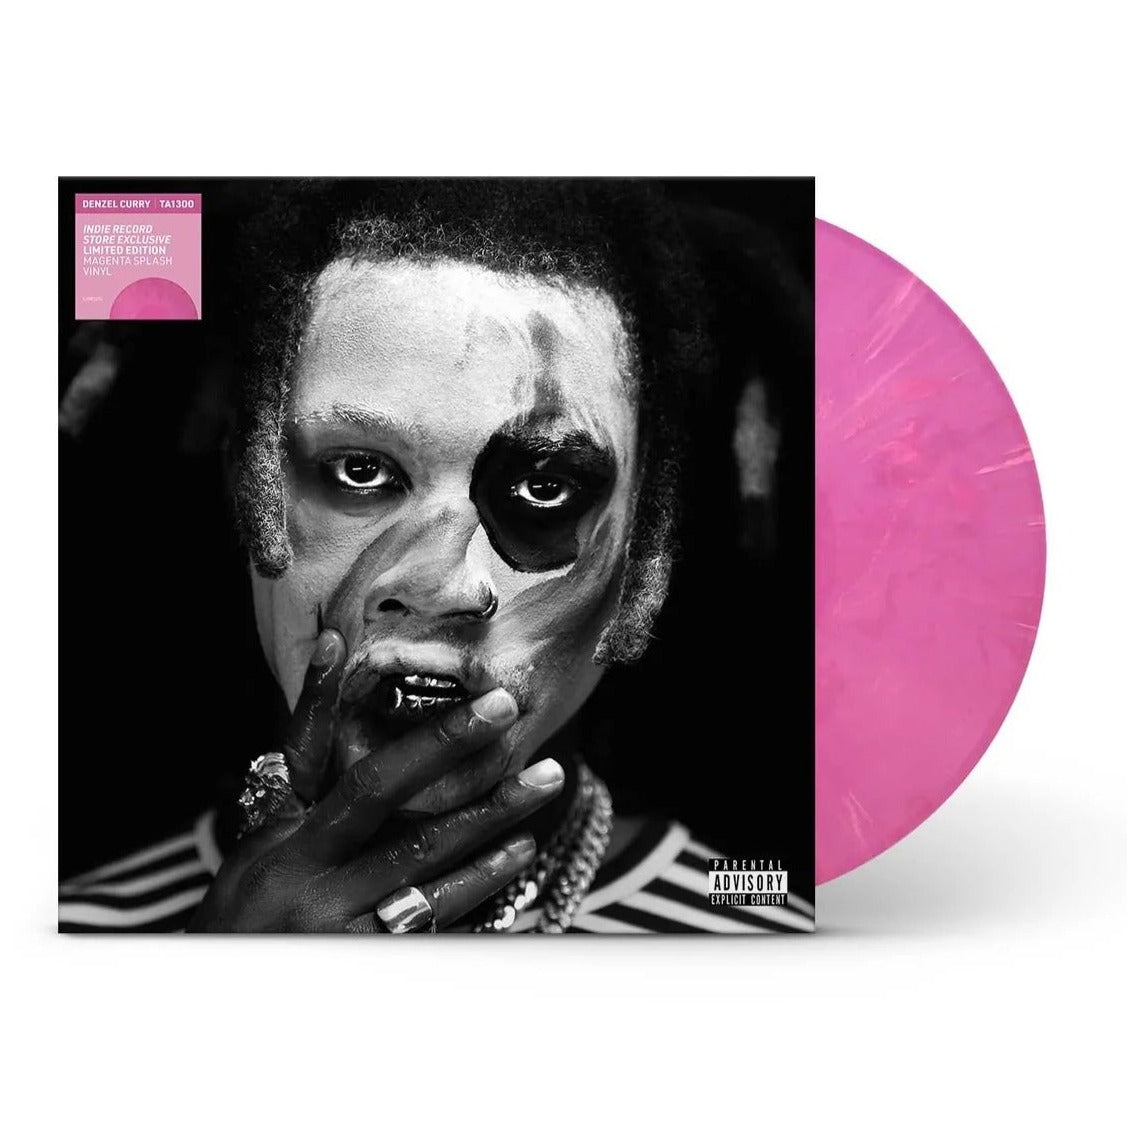 Denzel Curry - TA13OO LP (Indie Exclusive Magenta Splash Vinyl)